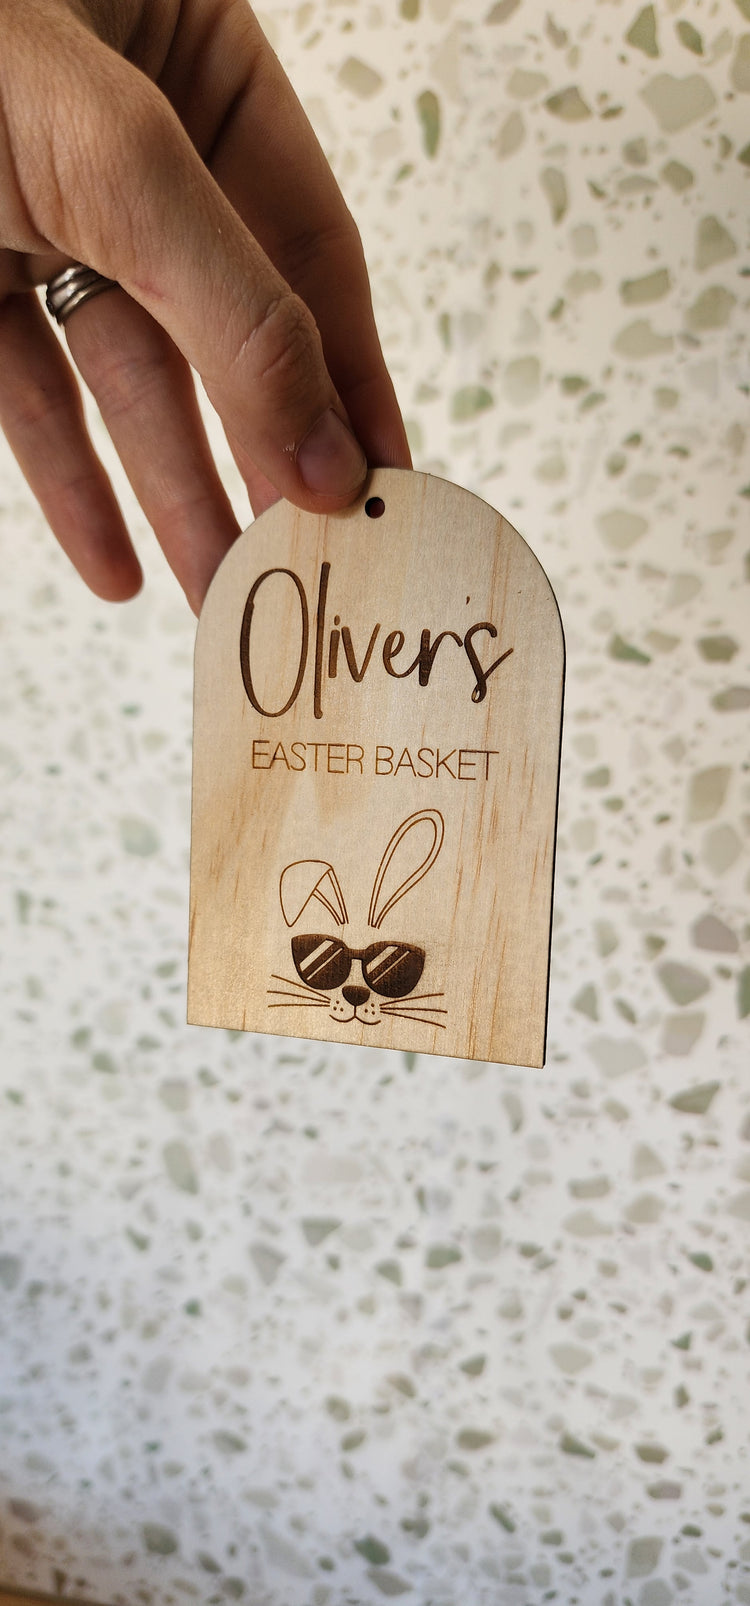 Oliver - Sunny Bunny Easket Tag